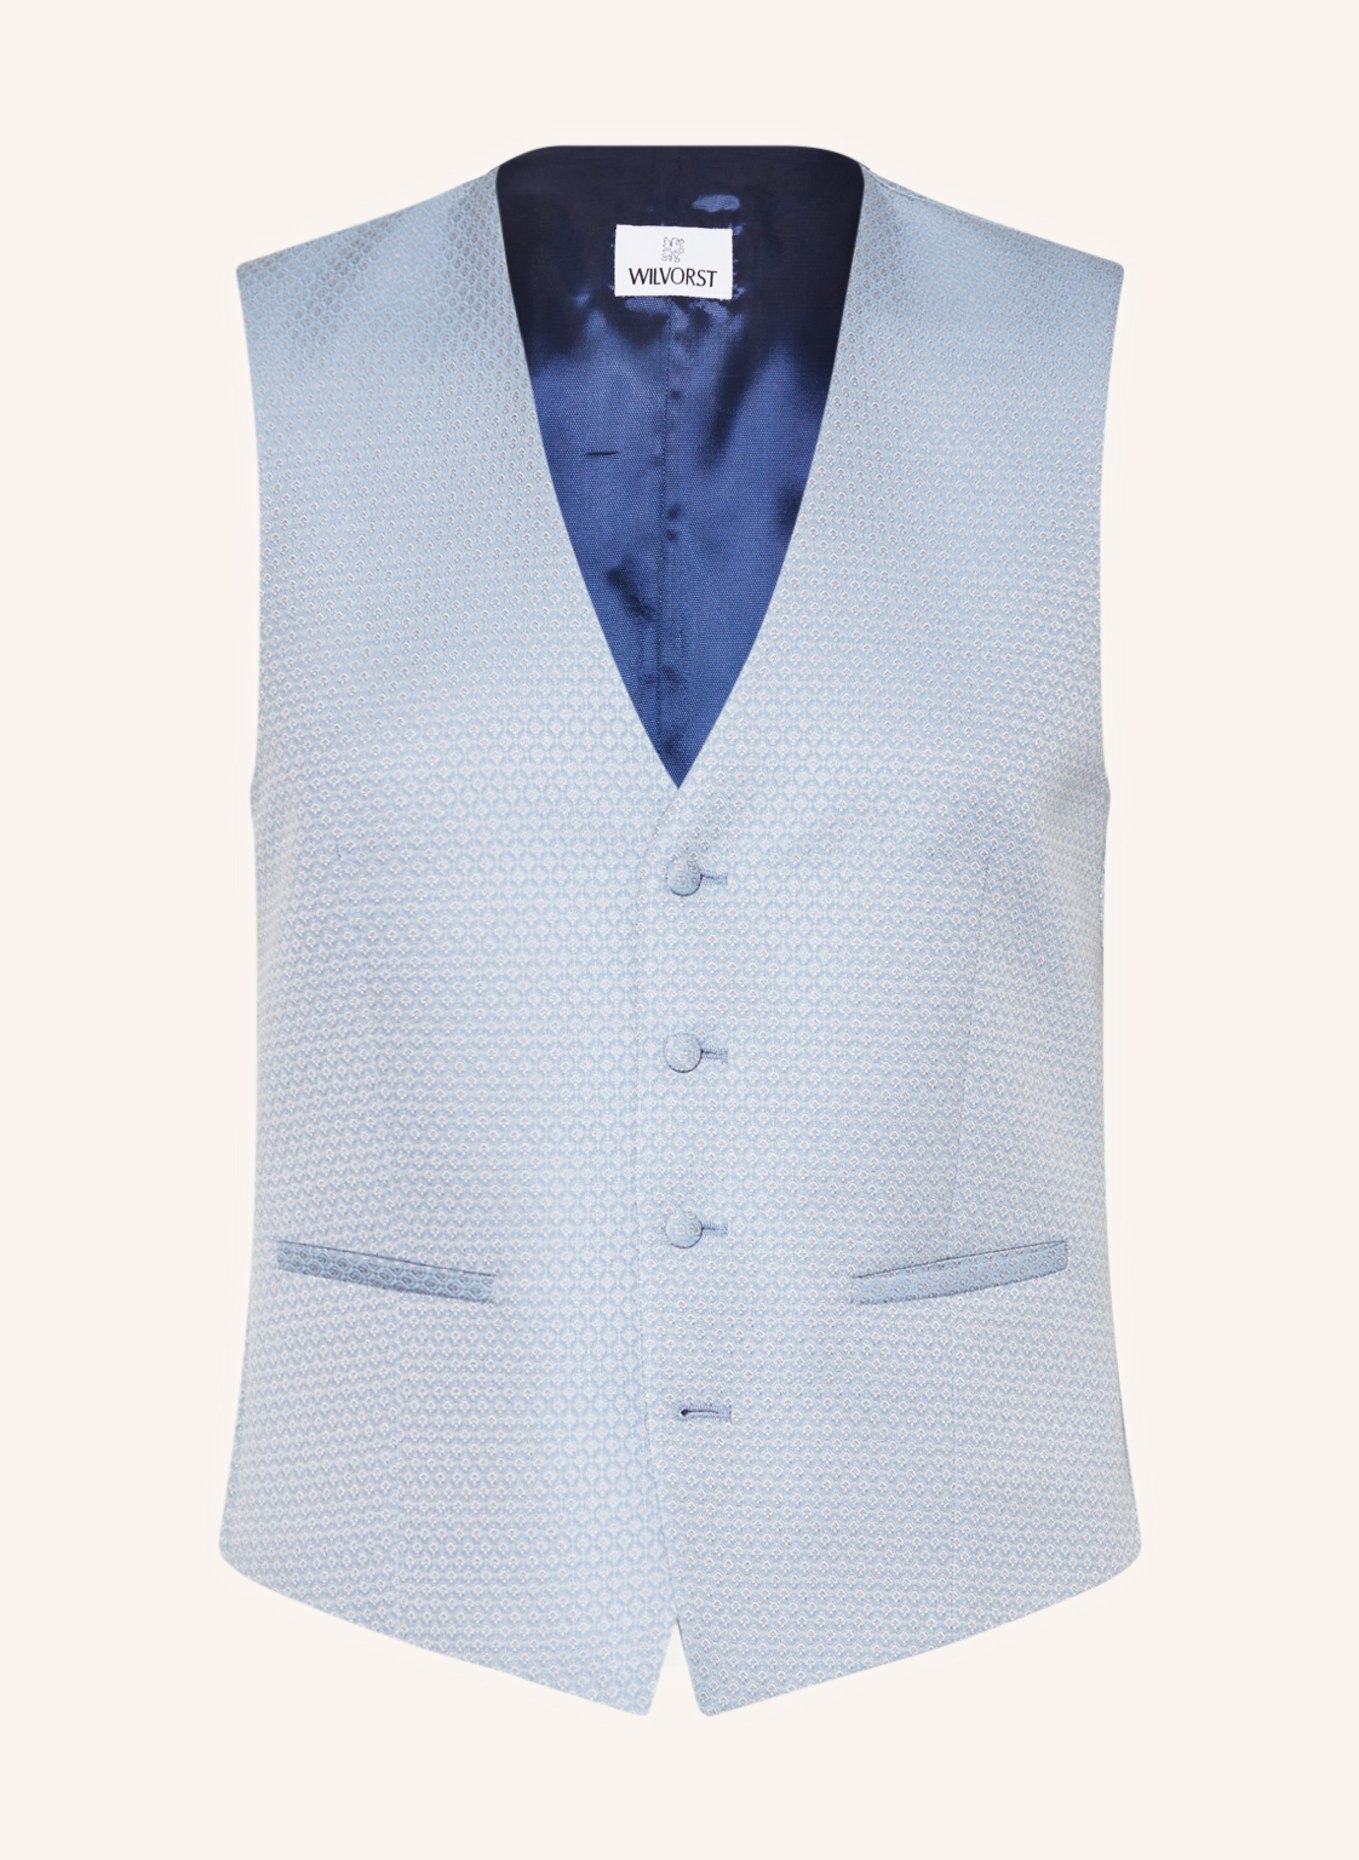 WILVORST Anzugweste Extra Slim Fit, Farbe: 030 hell Blau gem. (Bild 1)